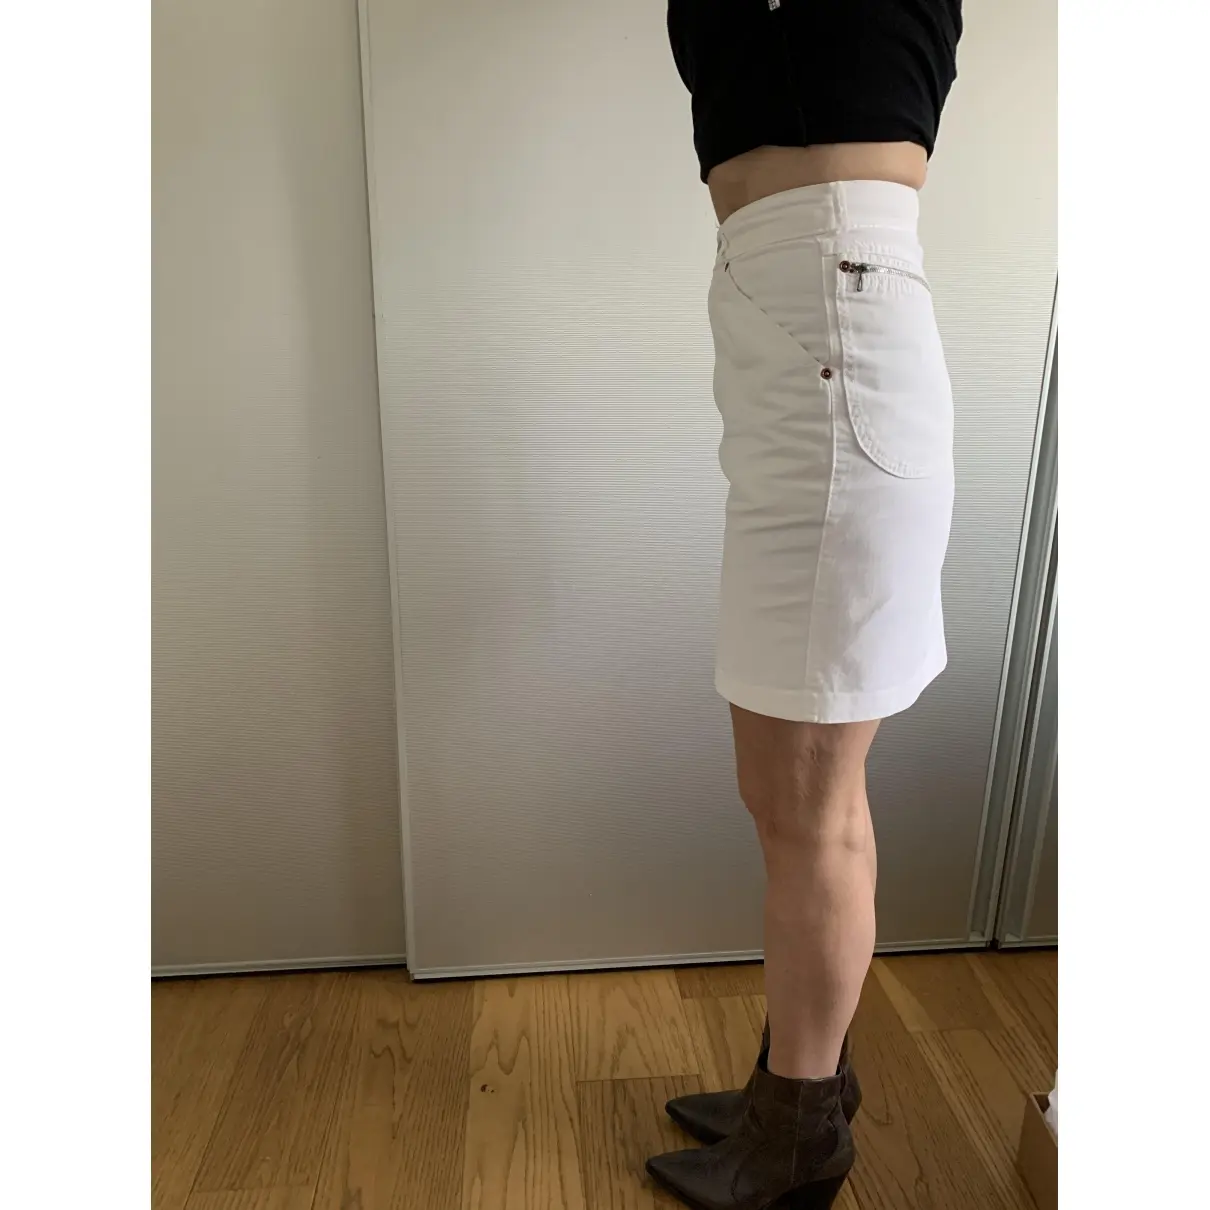 Fiorucci Mini skirt for sale - Vintage